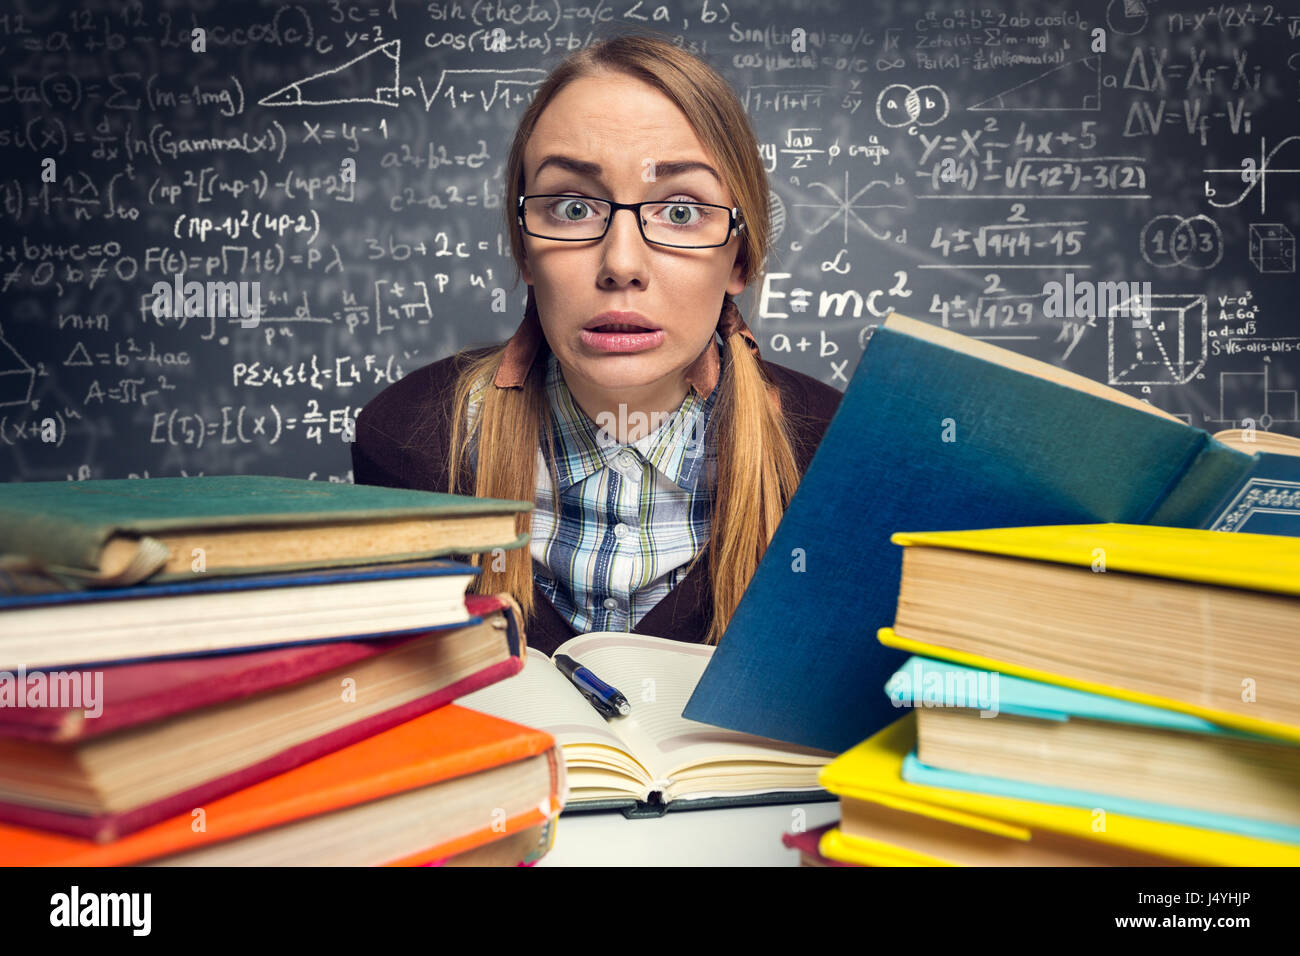 Asustado estudiante antes de un examen, expresión de pánico Foto de stock